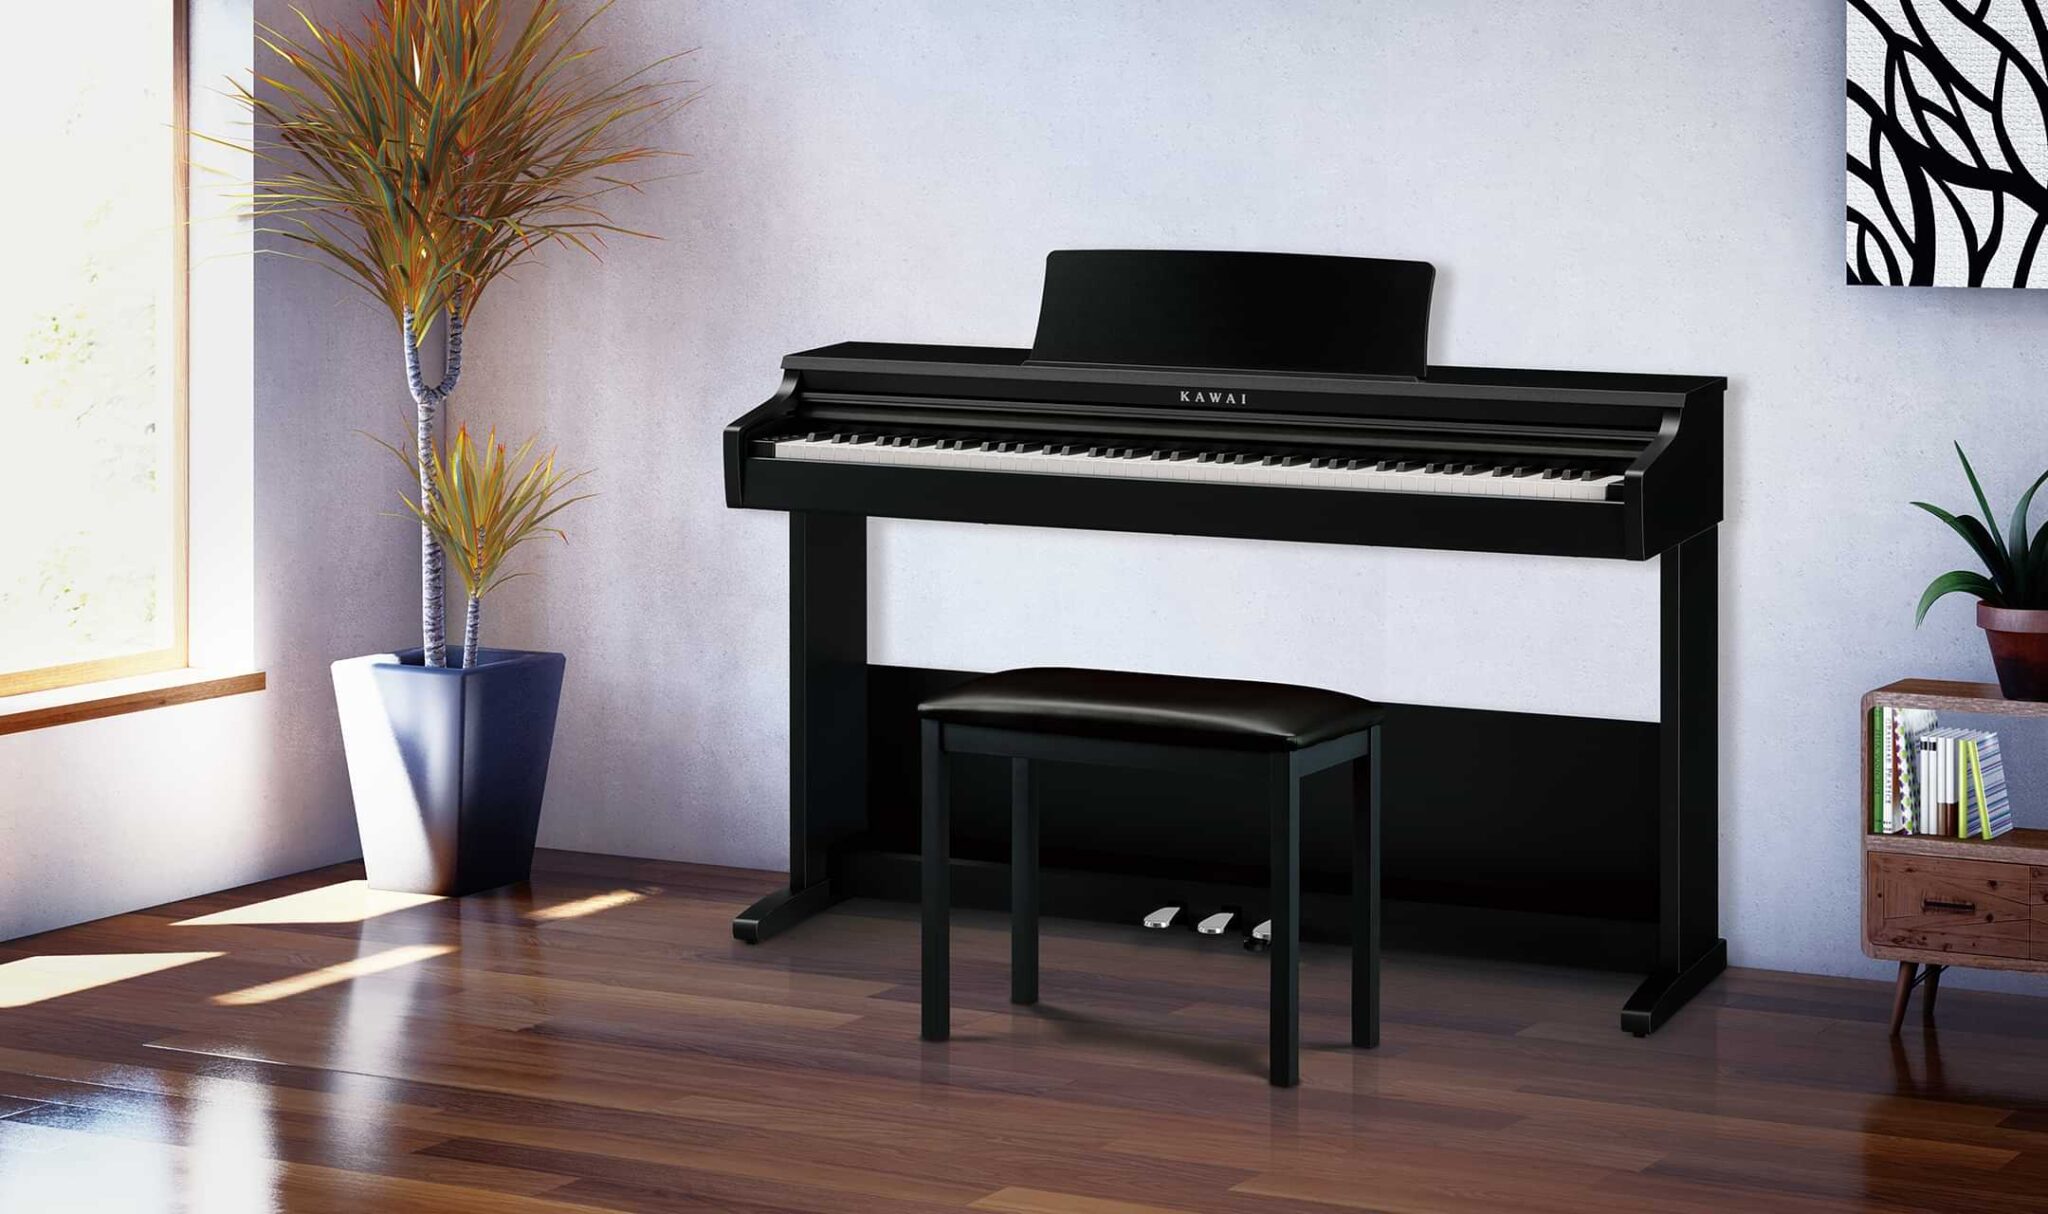 Kawai KDP75 digital piano cabinet design